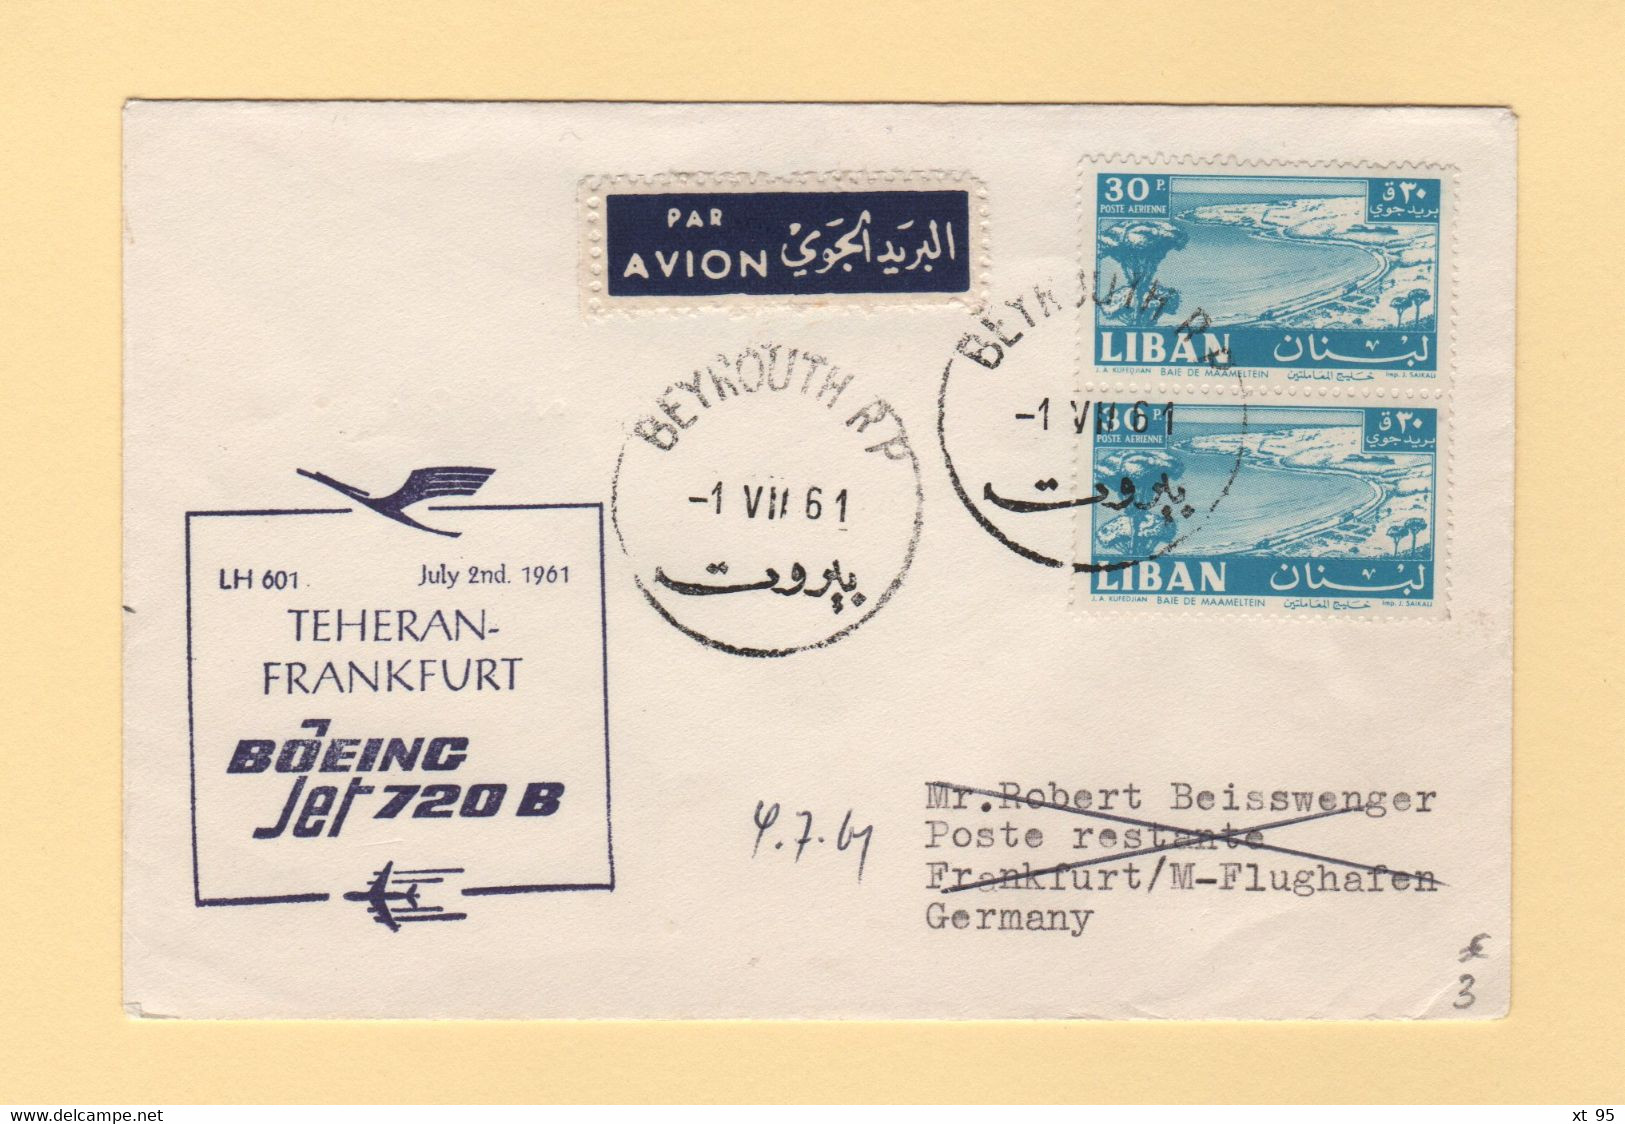 1er Vol - 1961 - Teheran Frankfurt - Boeing - Libanon